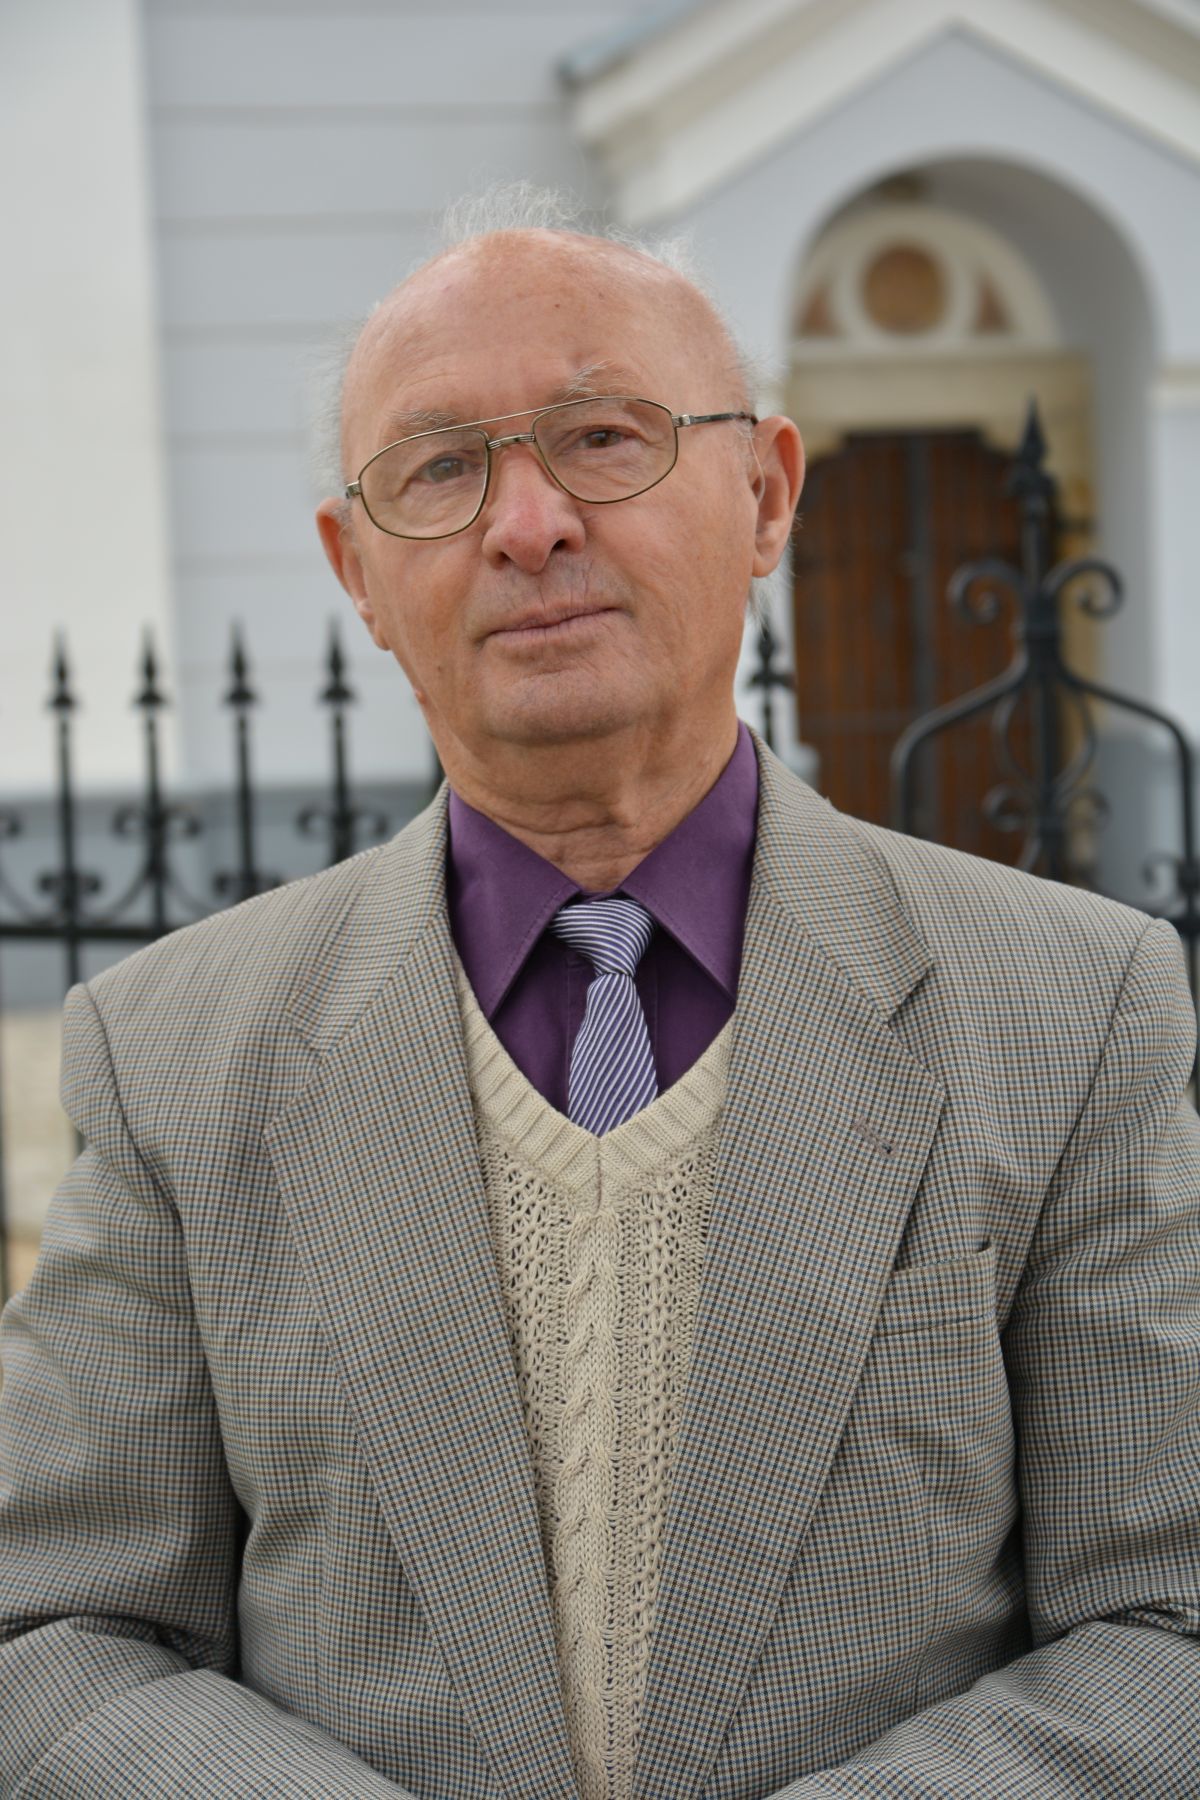 id. Szabó Márton